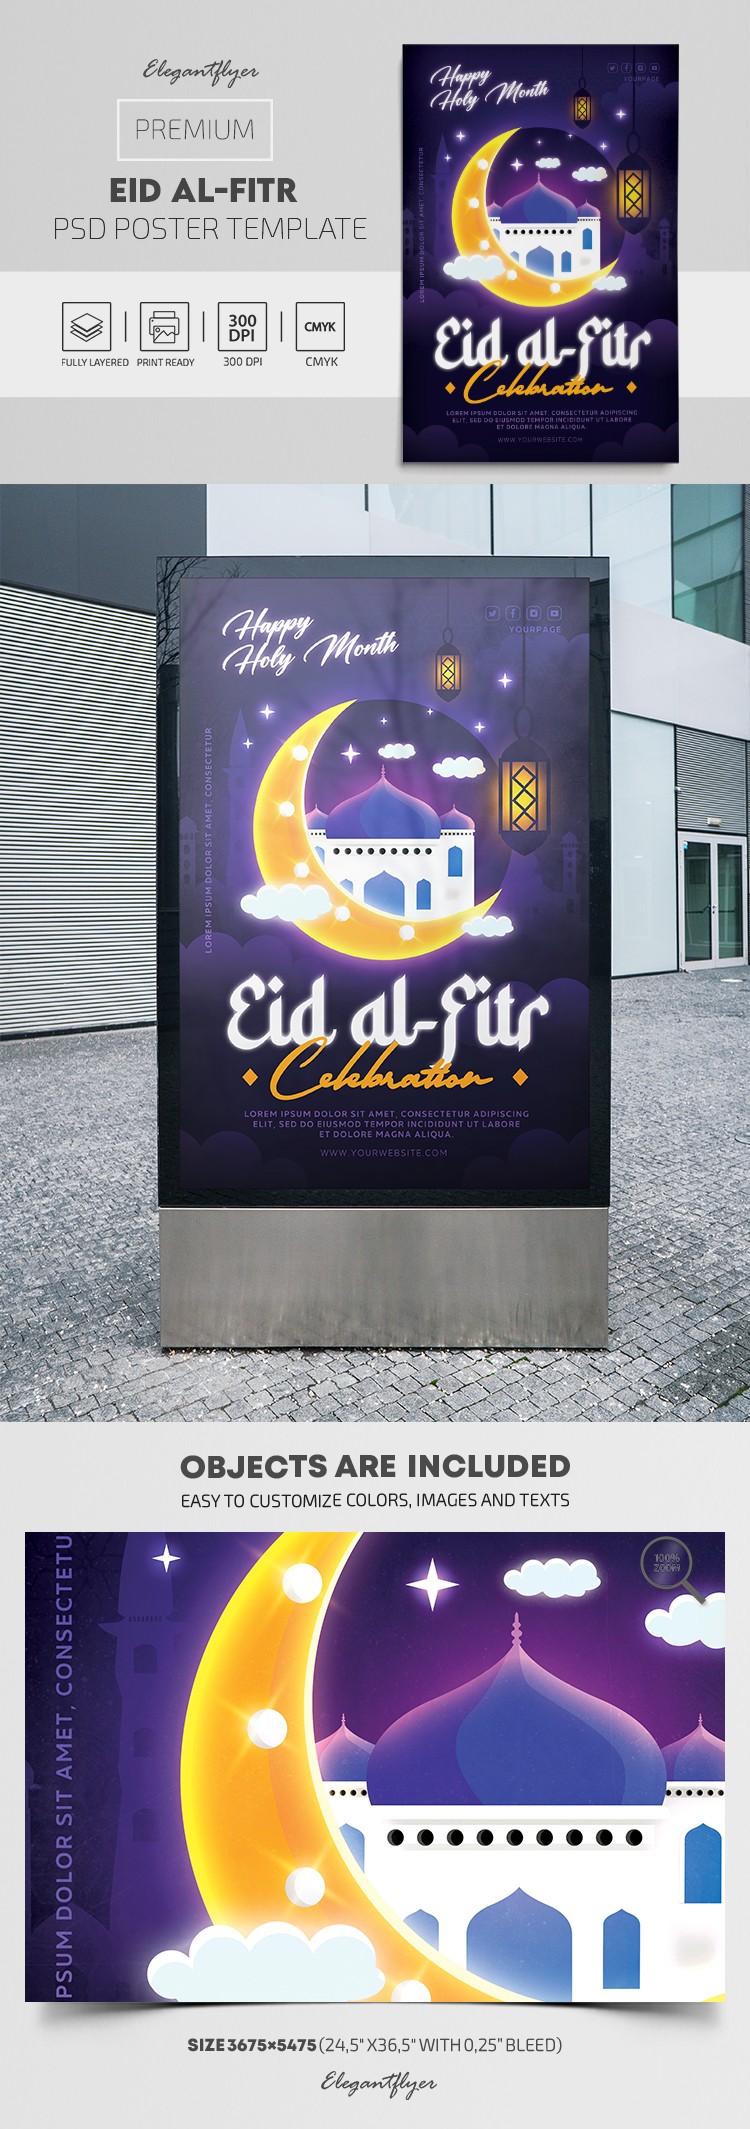 Eid Al-Fitr Poster - Eid Al-Fitr-Plakat by ElegantFlyer